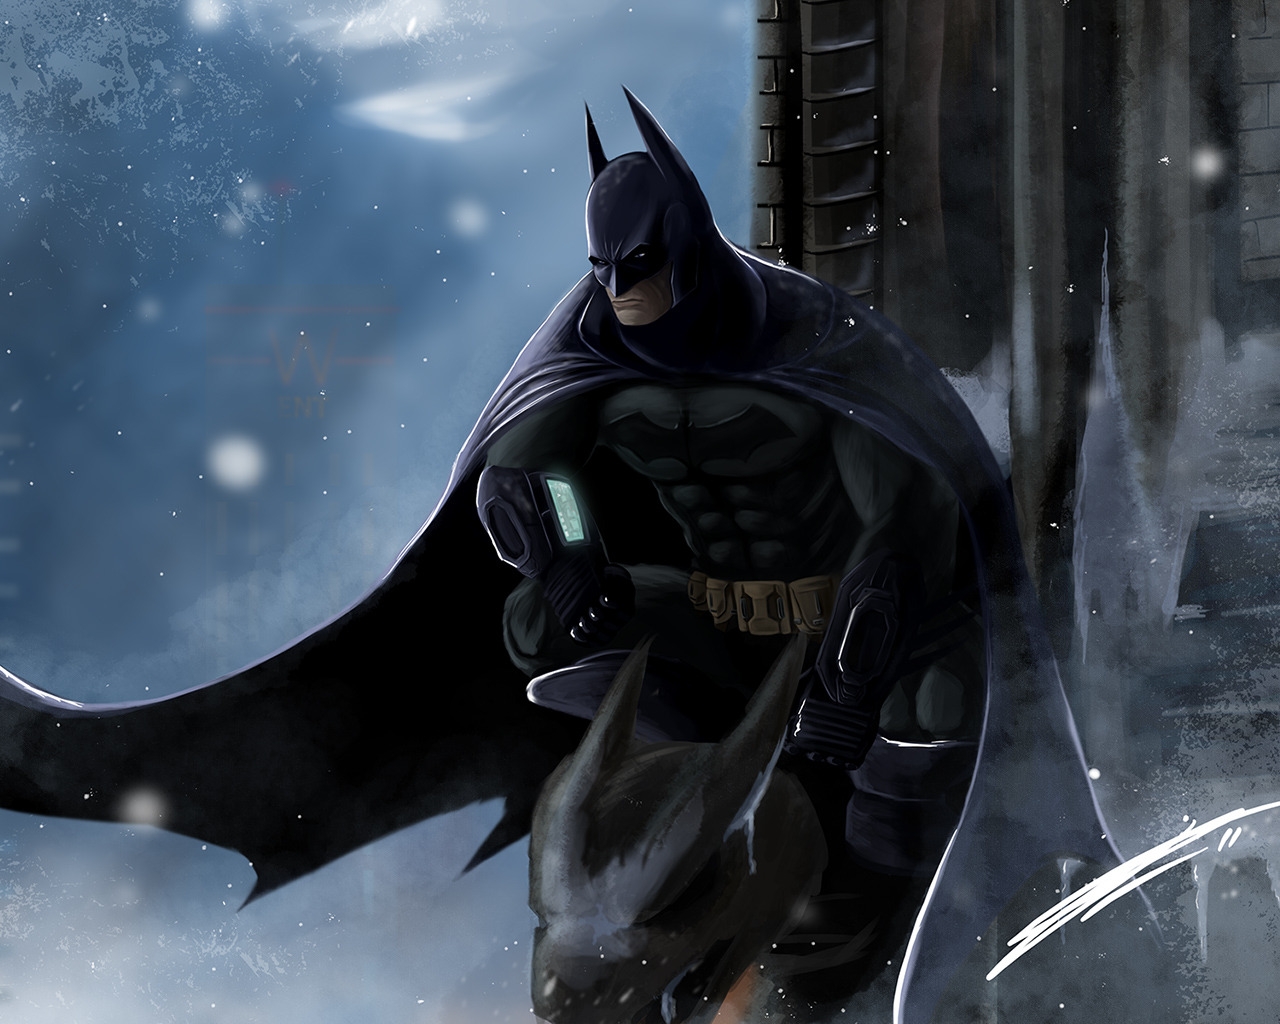 Batman Artwork for 1280 x 1024 resolution